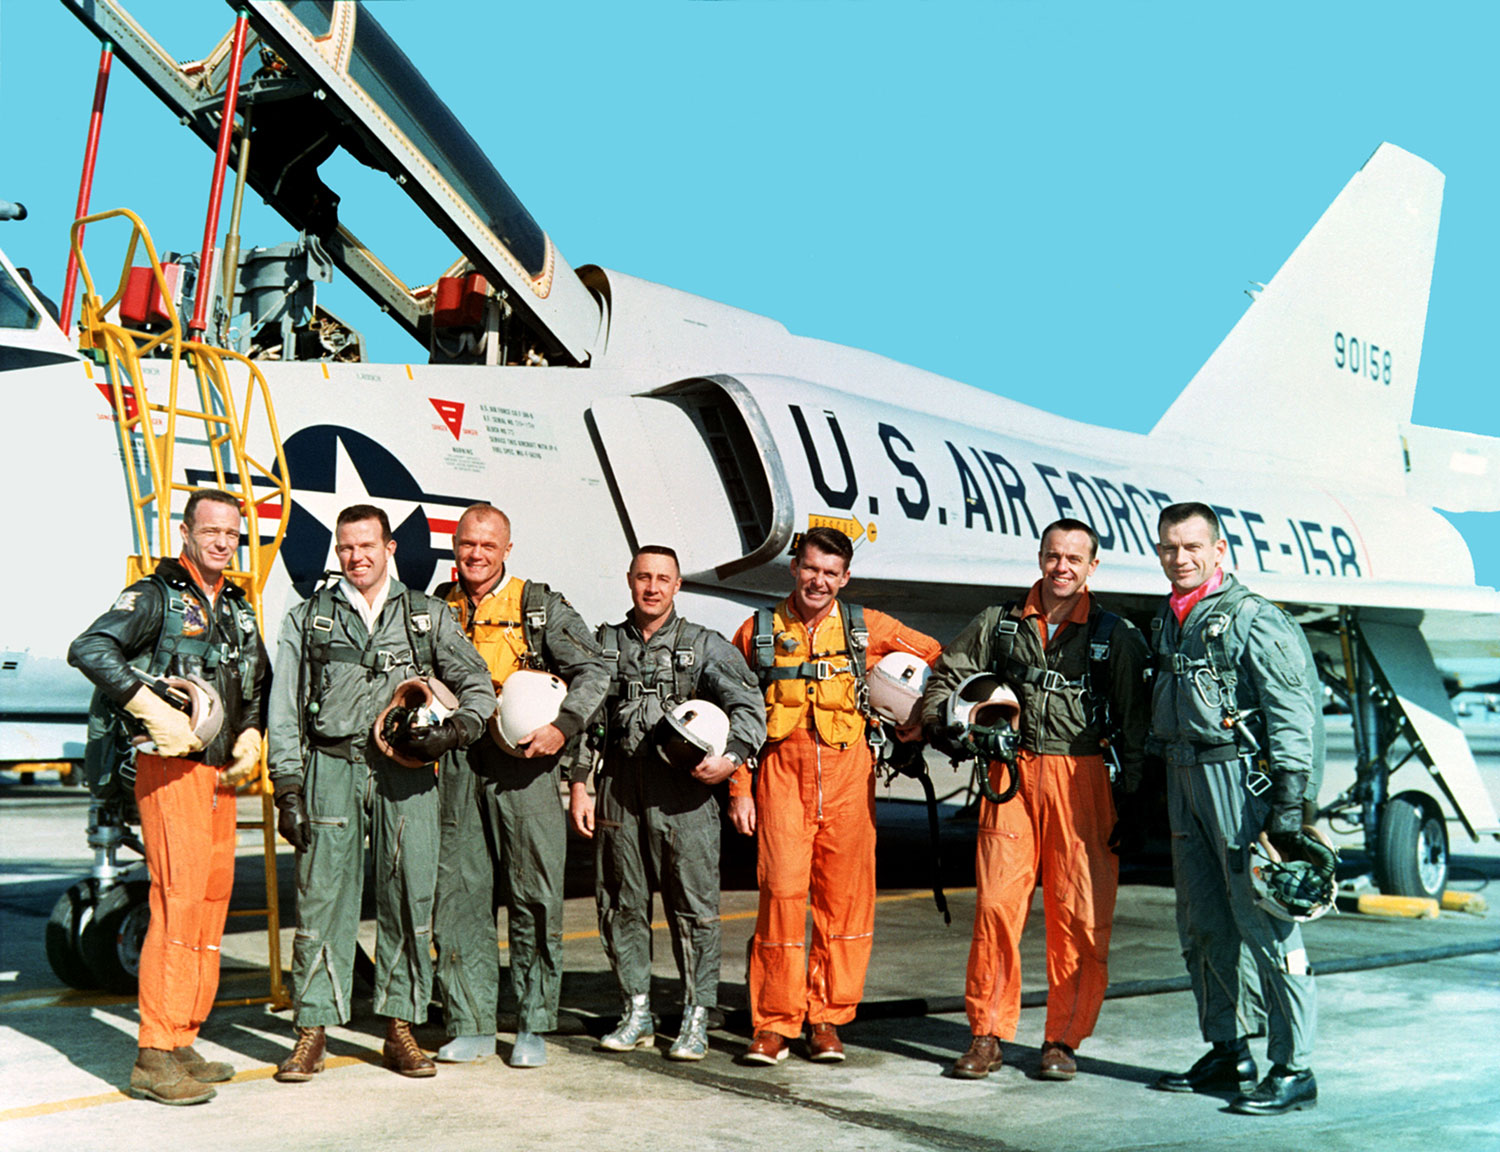 The Original Mercury Seven astronauts with a U.S. Air Force F-106B jet aircraft. From left to right: Scott Carpenter, Gordon Cooper, John Glenn, Gus Grissom, Wally Schirra, Alan Shepard, Deke Slayton. Credit: NASA